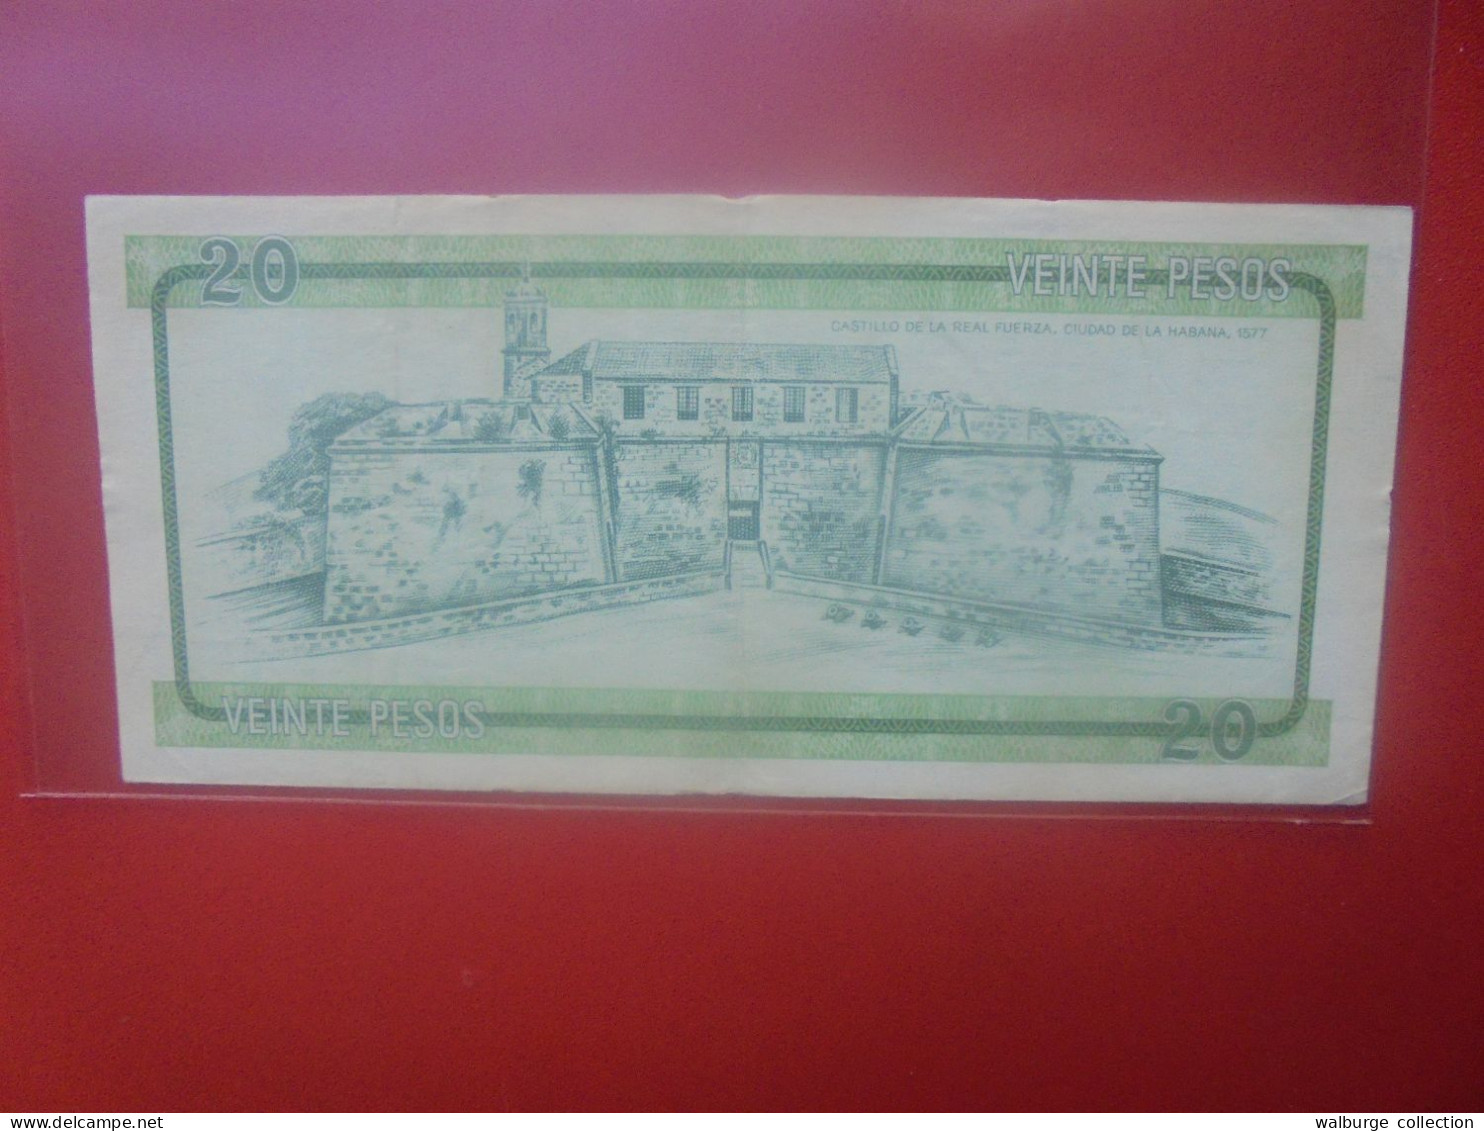 CUBA 20 PESOS ND (1985) "Exchange Certificate" Série B Circuler (B.33) - Cuba